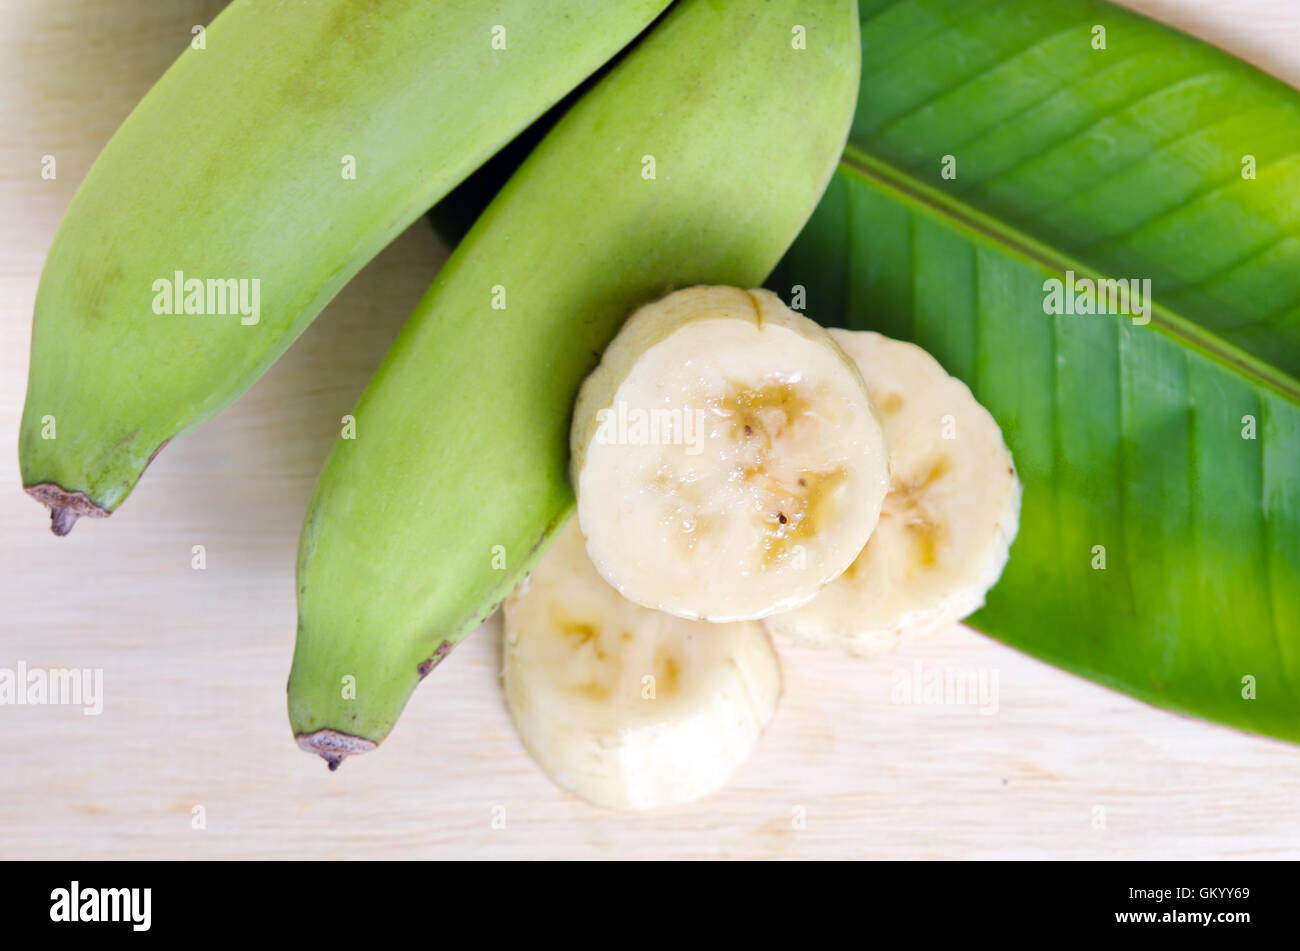 Banana (Other names are Musa banana acuminata, Musa balbisiana, and Musa x paradisiaca) fruit with leaf Stock Photo